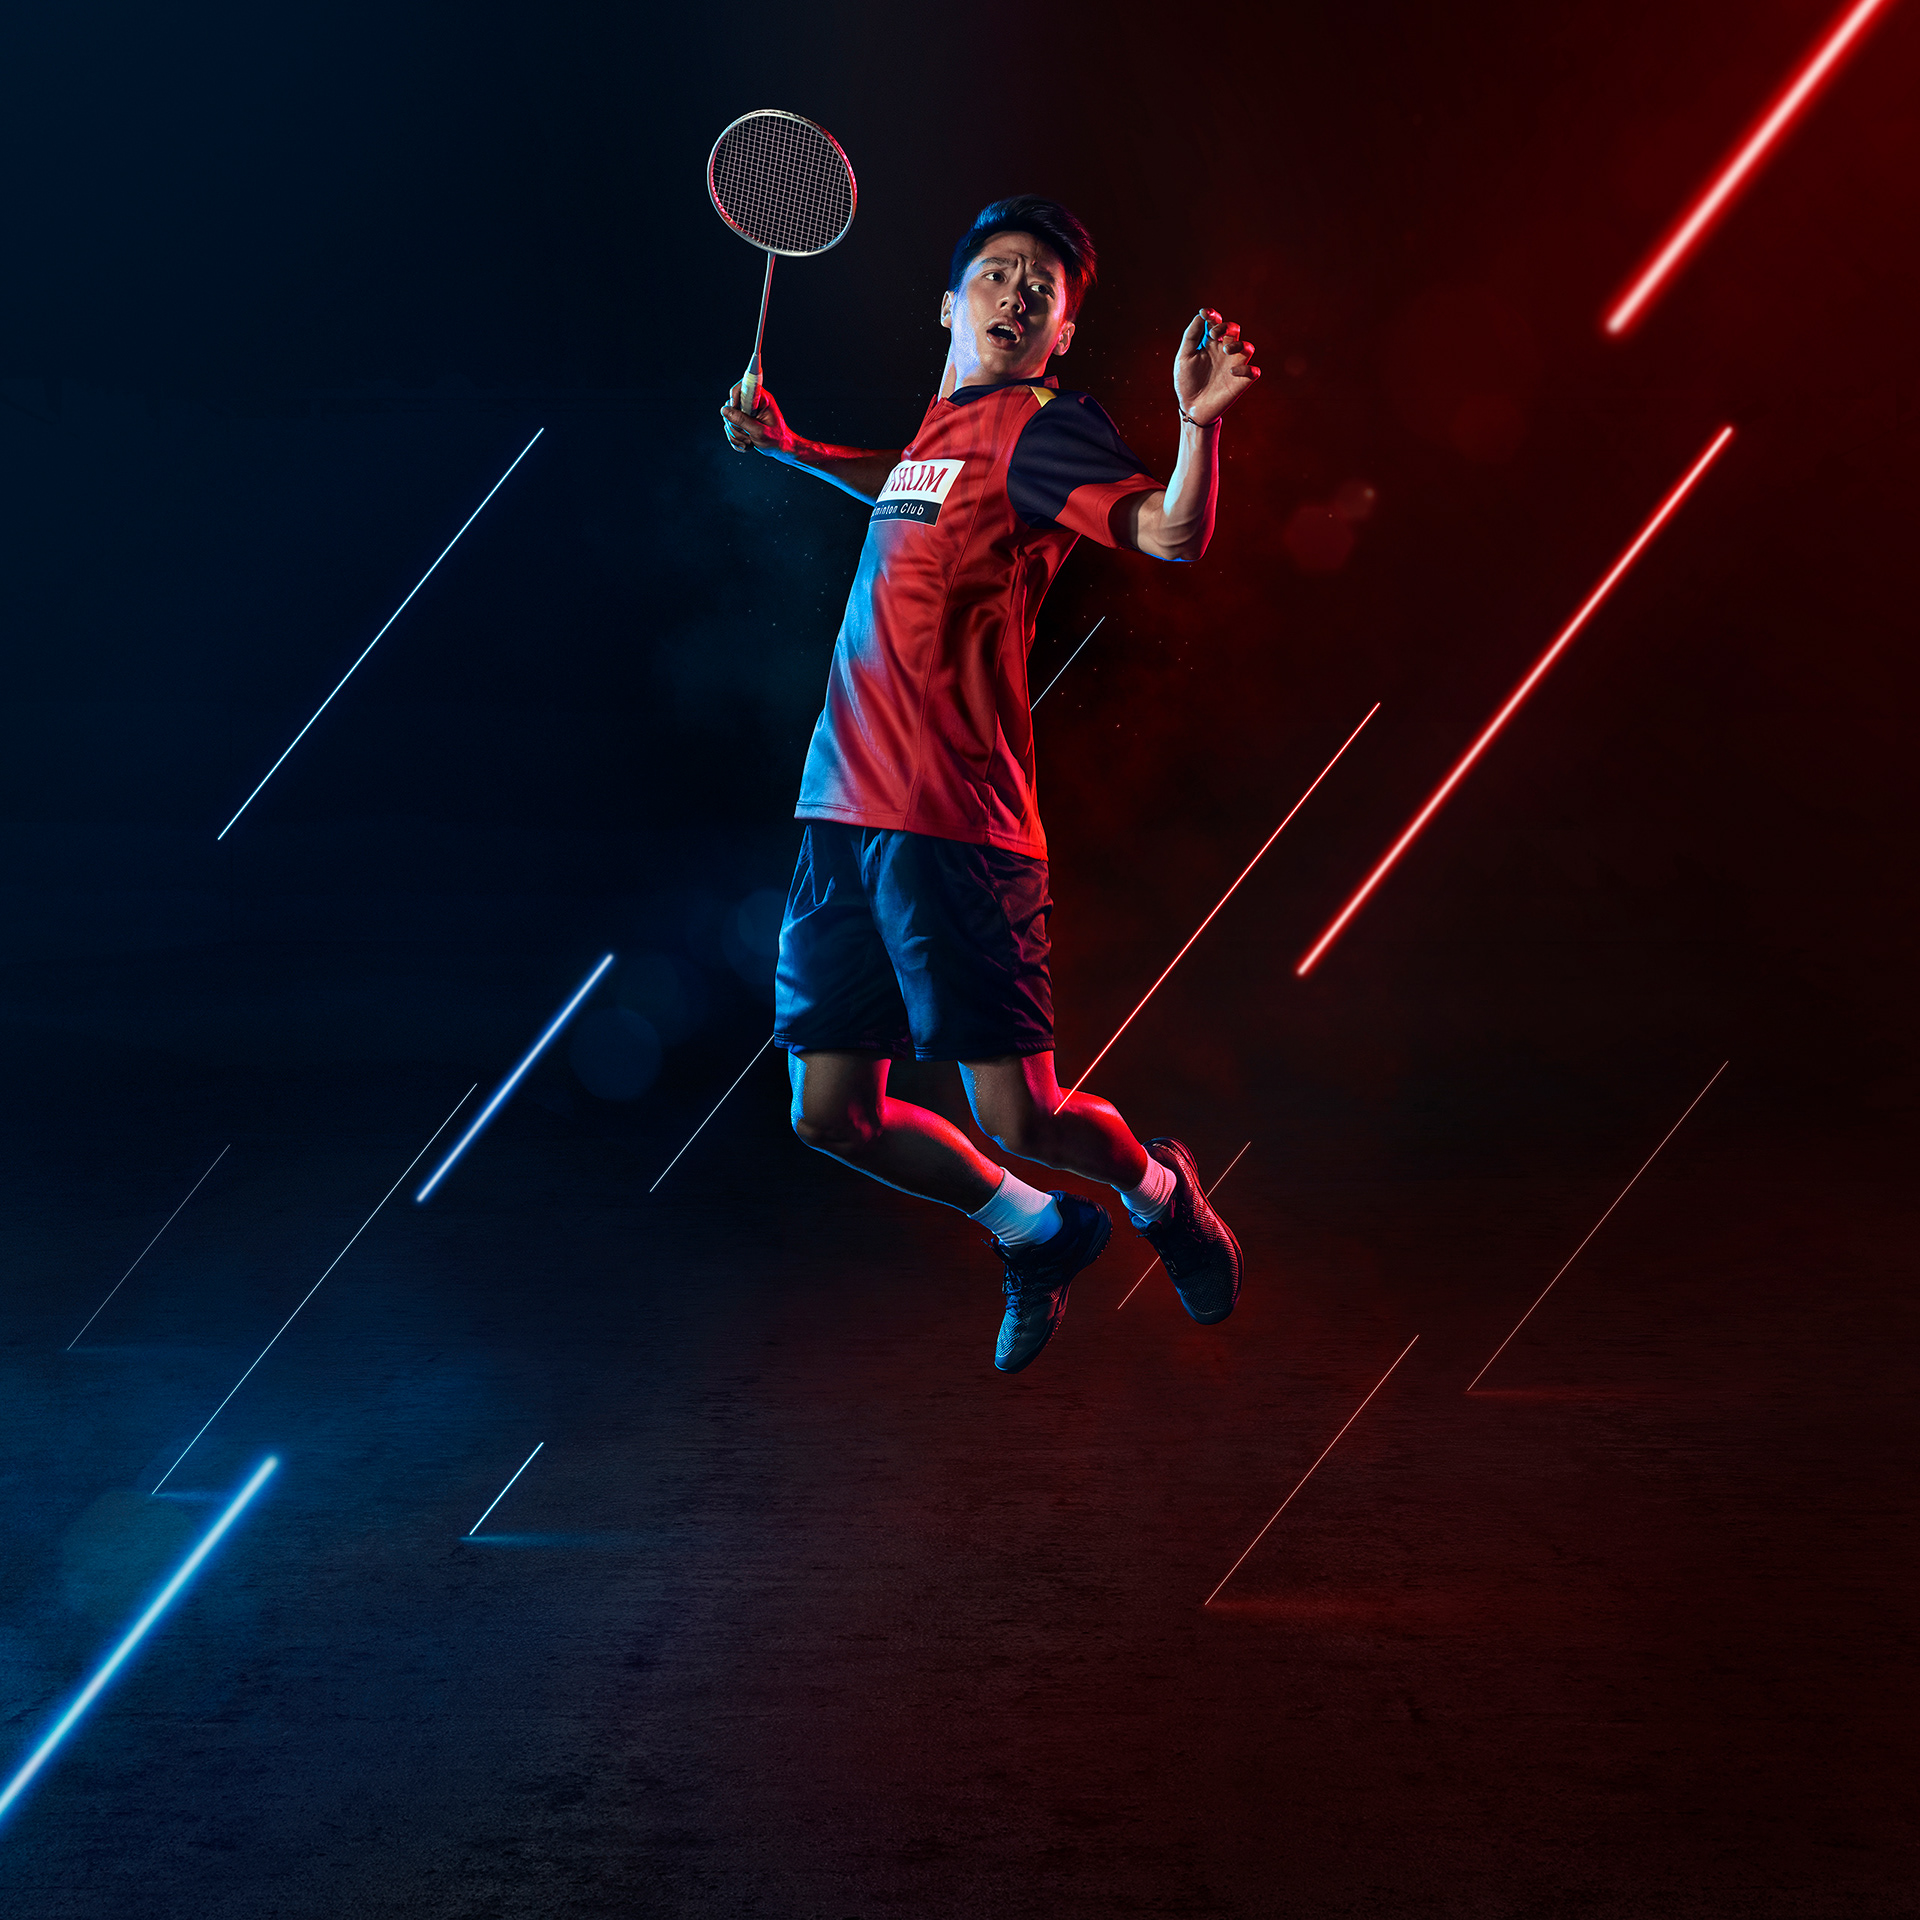 2019 Badminton Concept on Behance